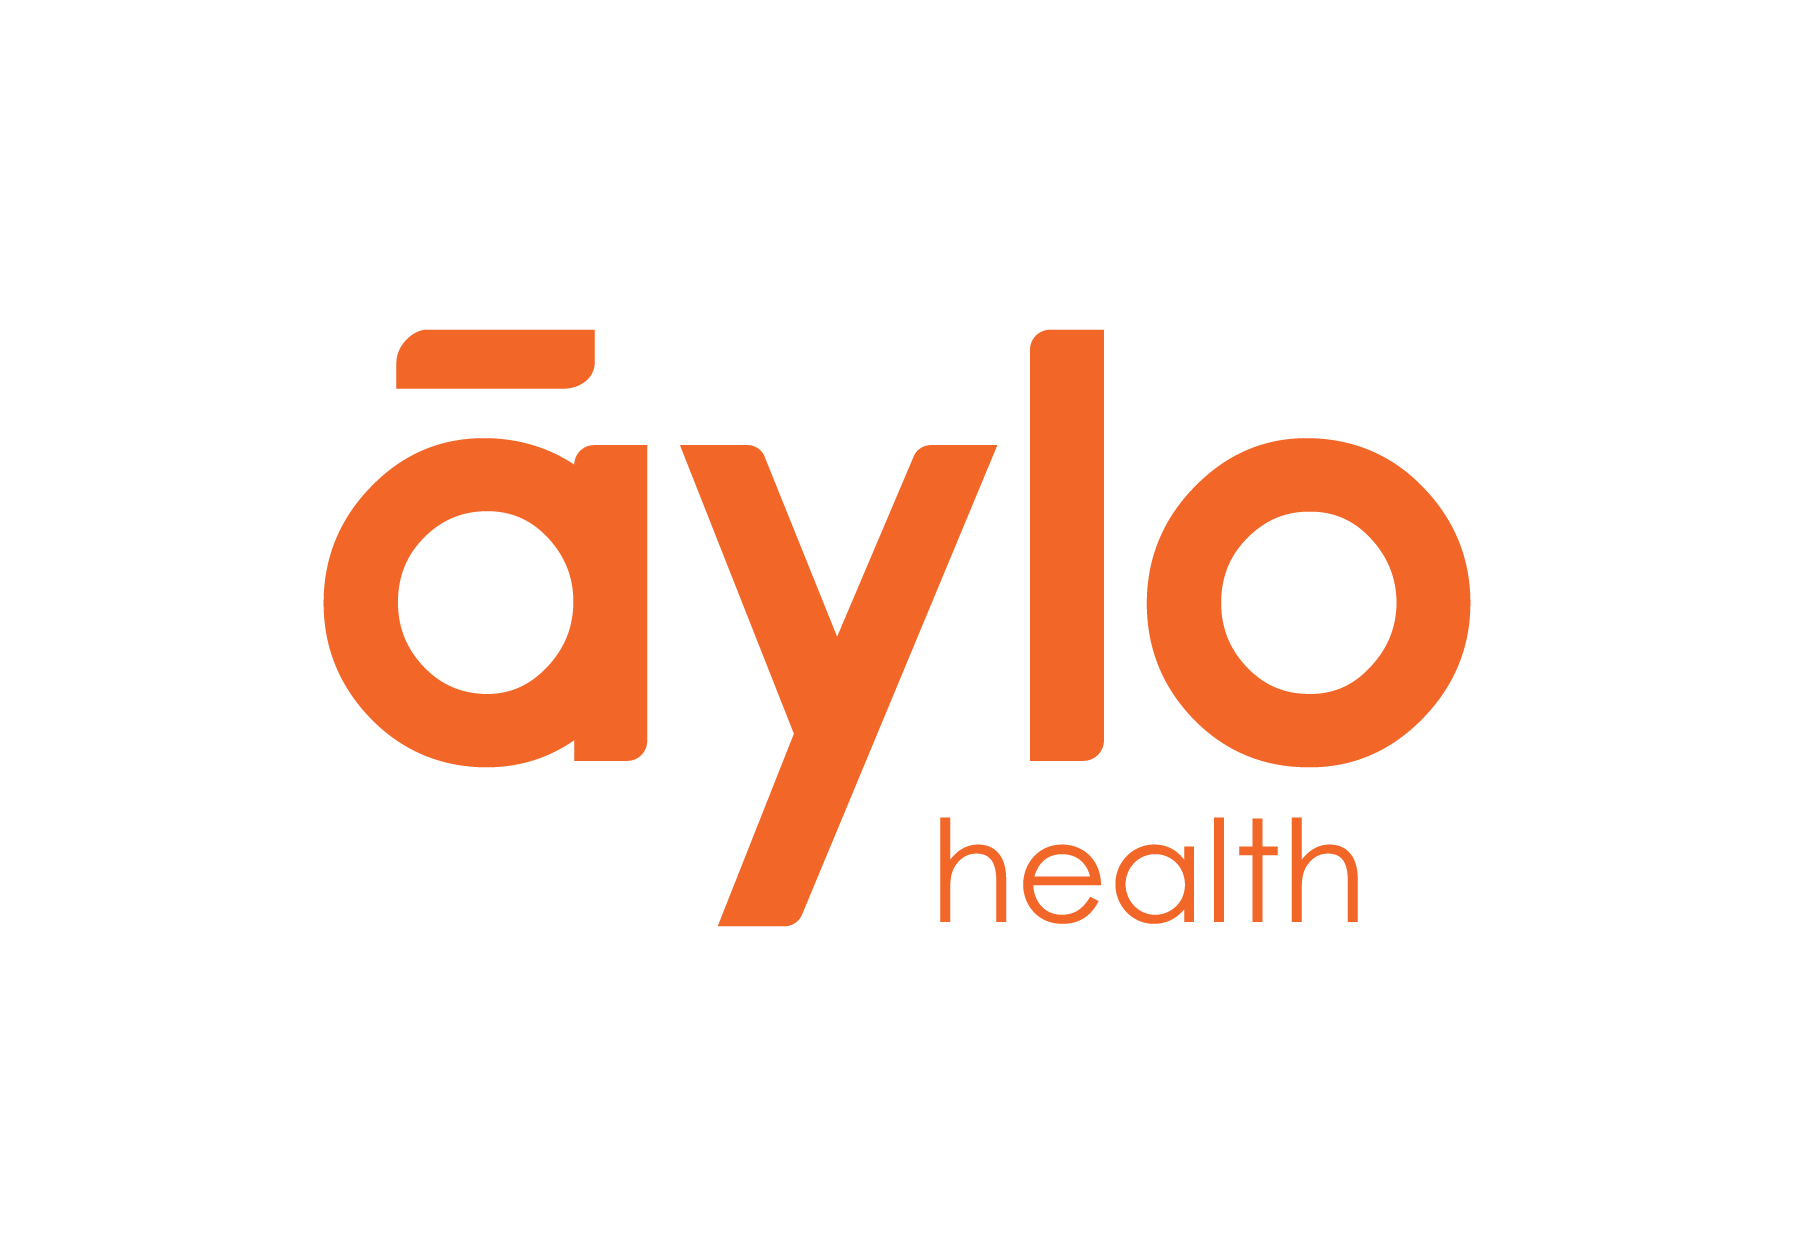 Aylo Health